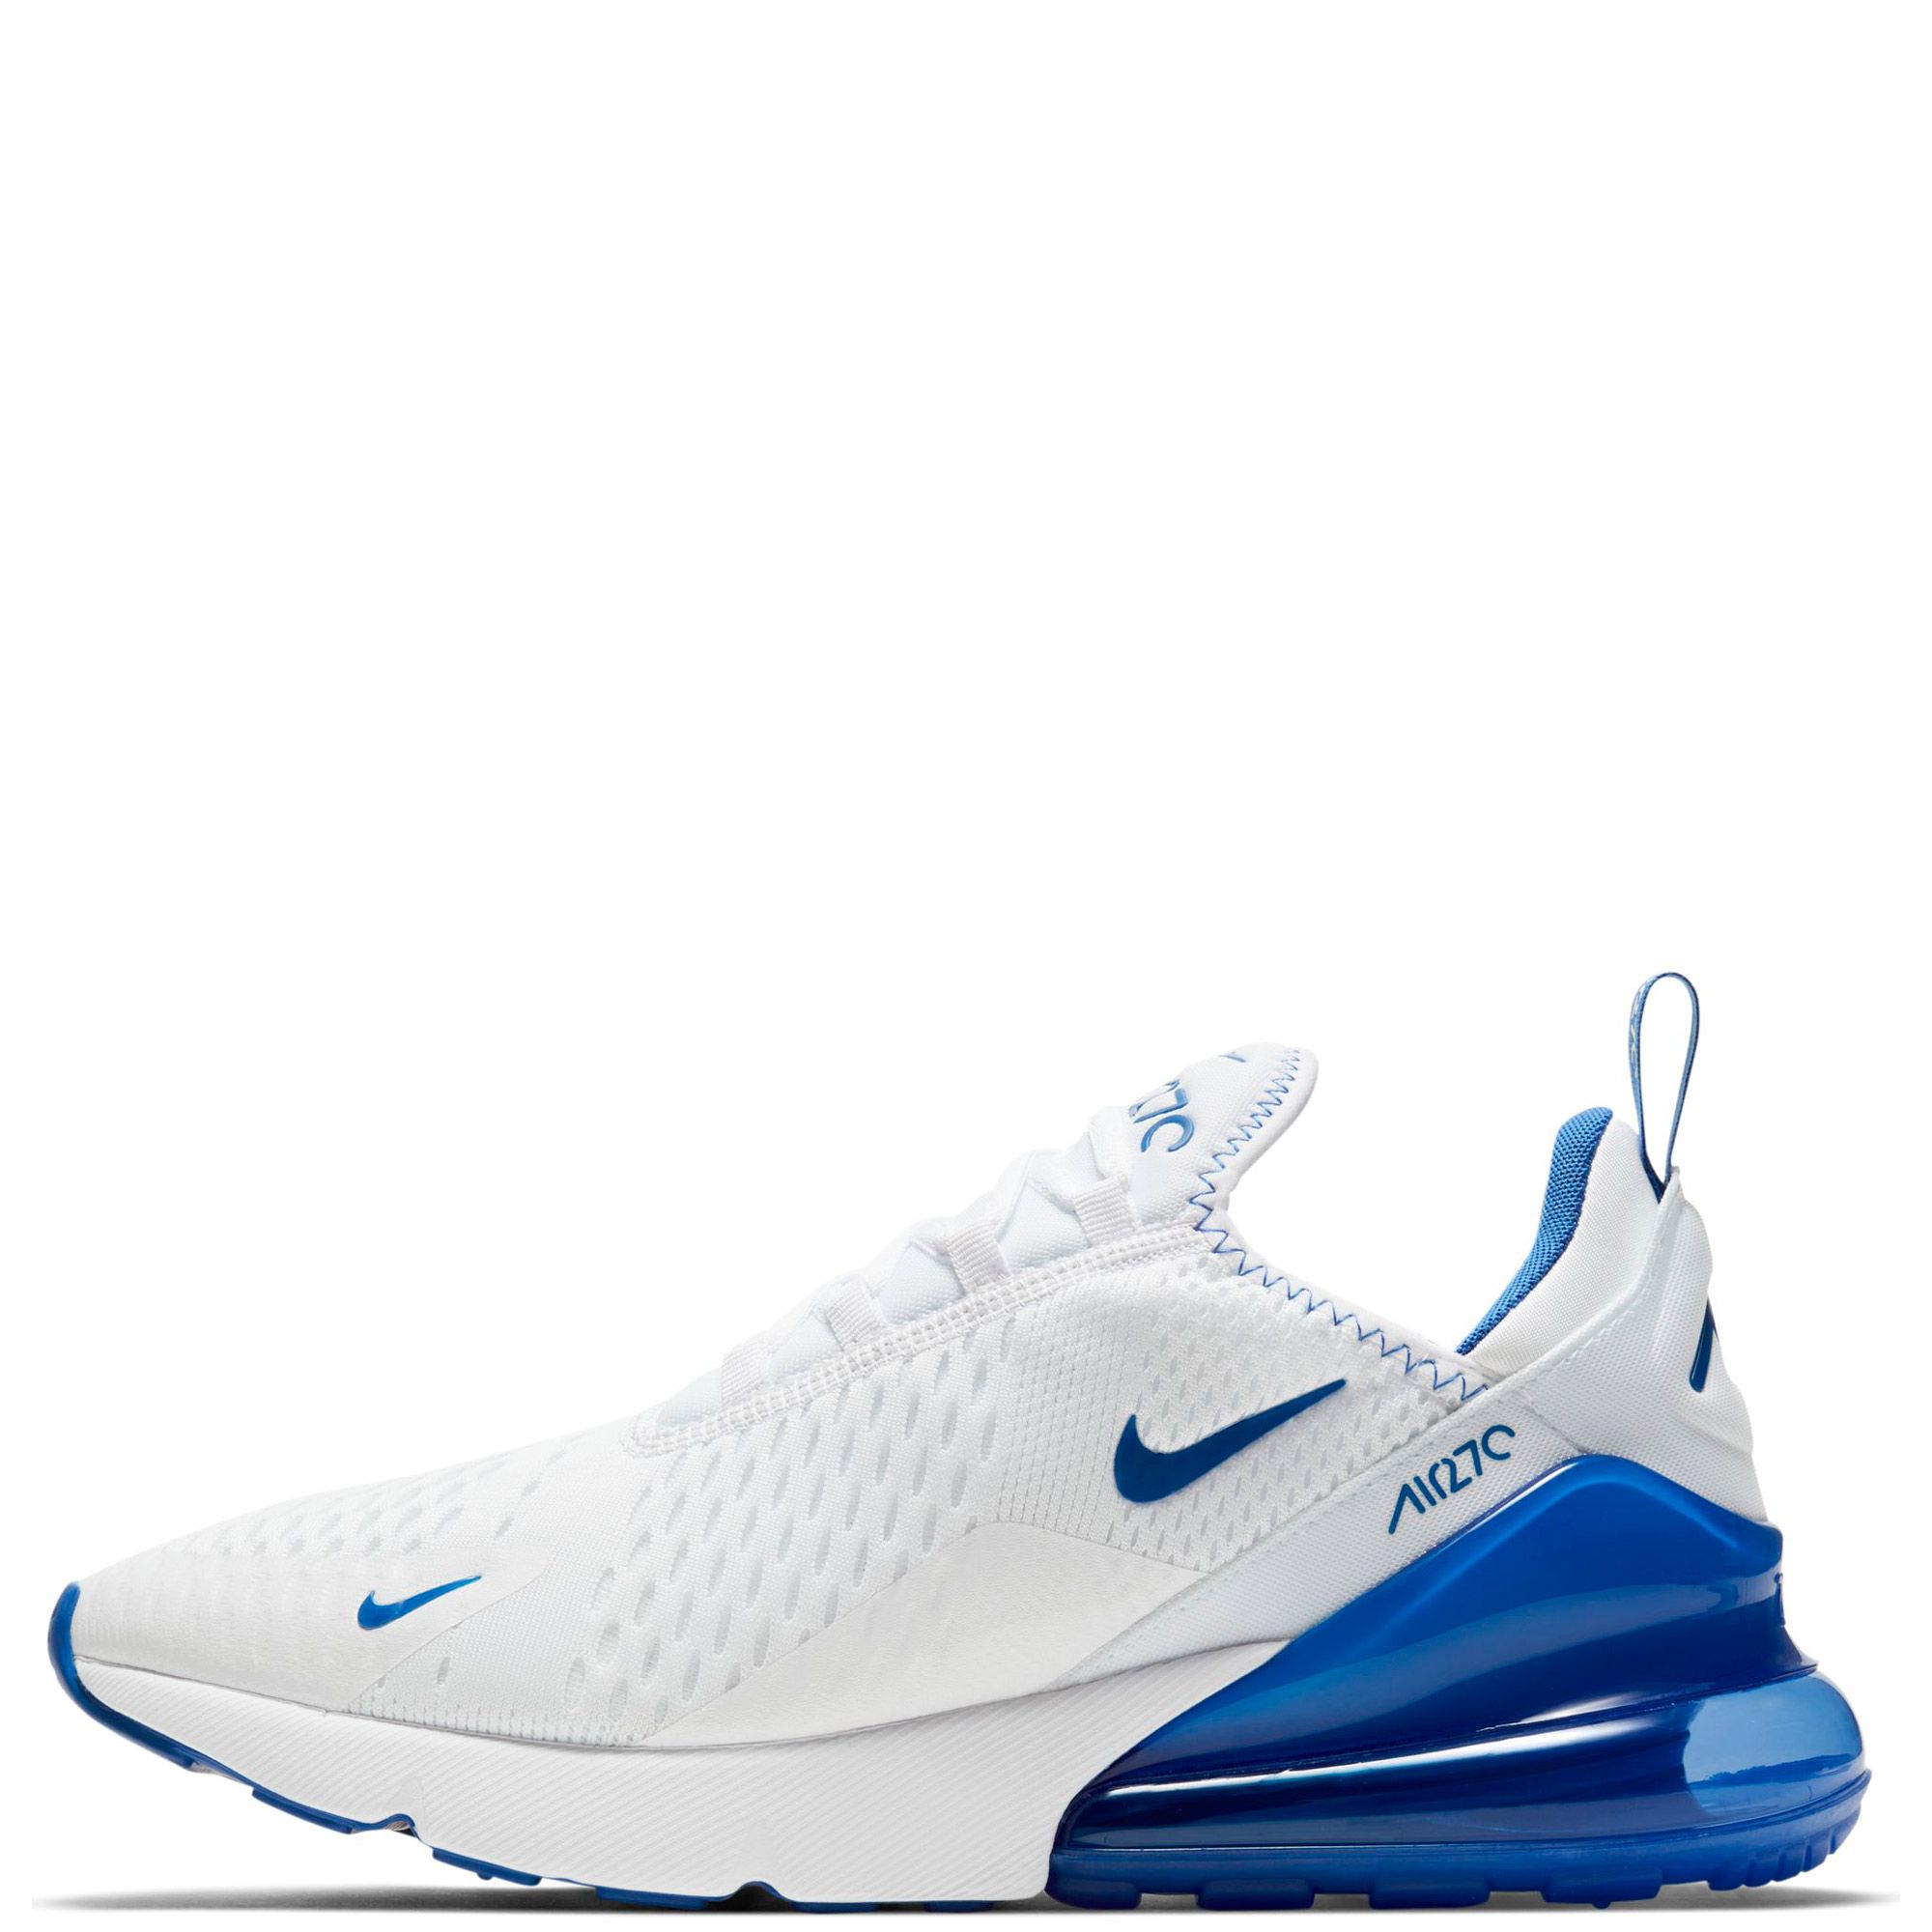 Men's Nike Air Max 270 Sneaker, Size 10 M - White/Blue